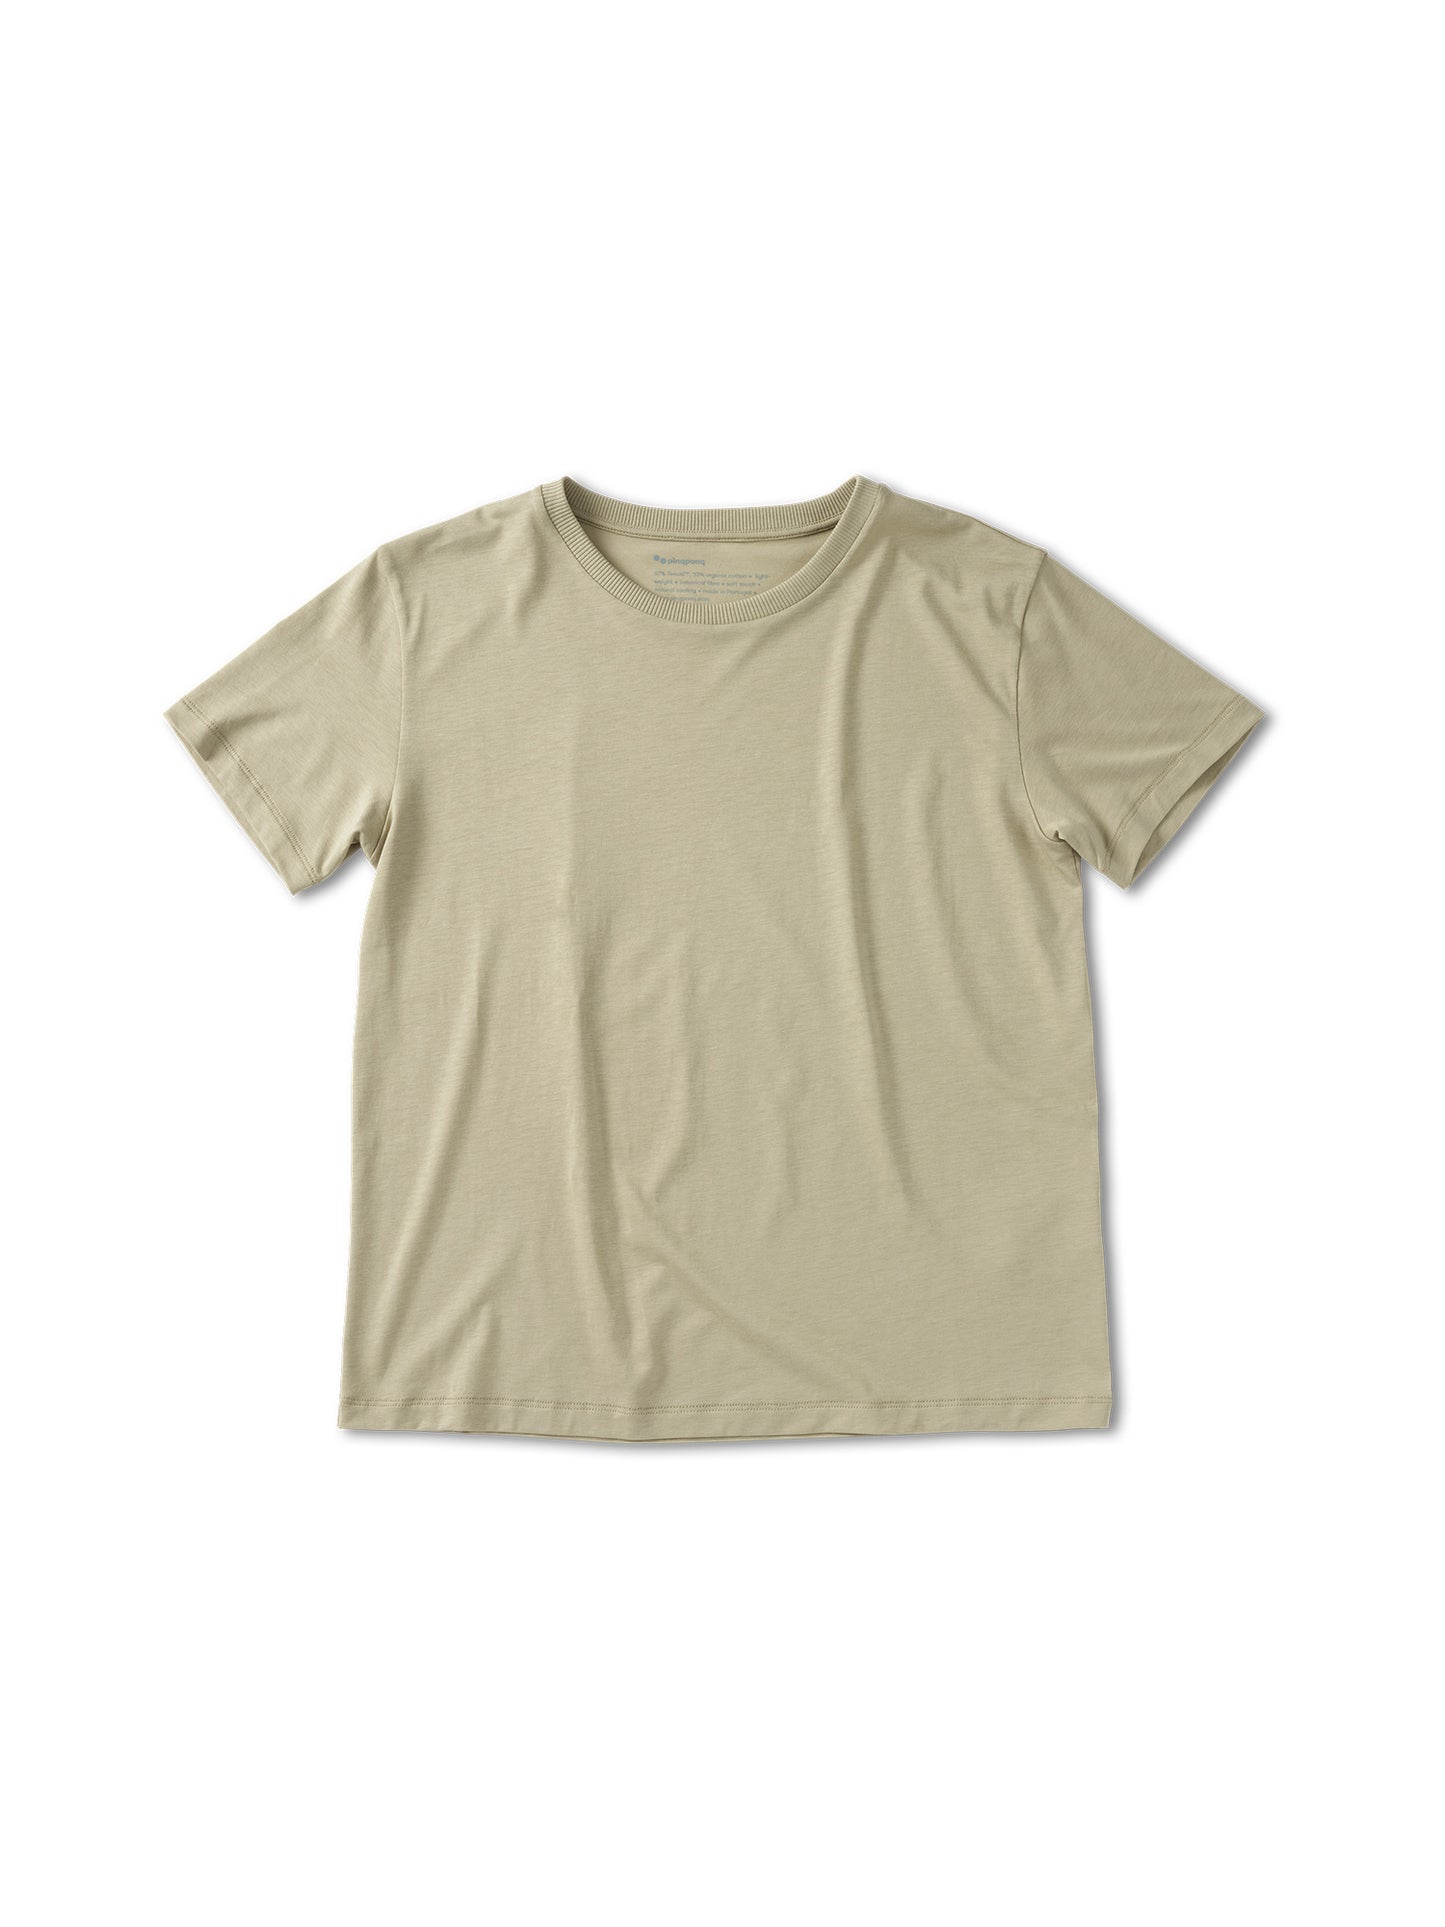 pinqponq-Tshirt-Tencel-Cotton-Women-Tone-Wooden-Olive-front